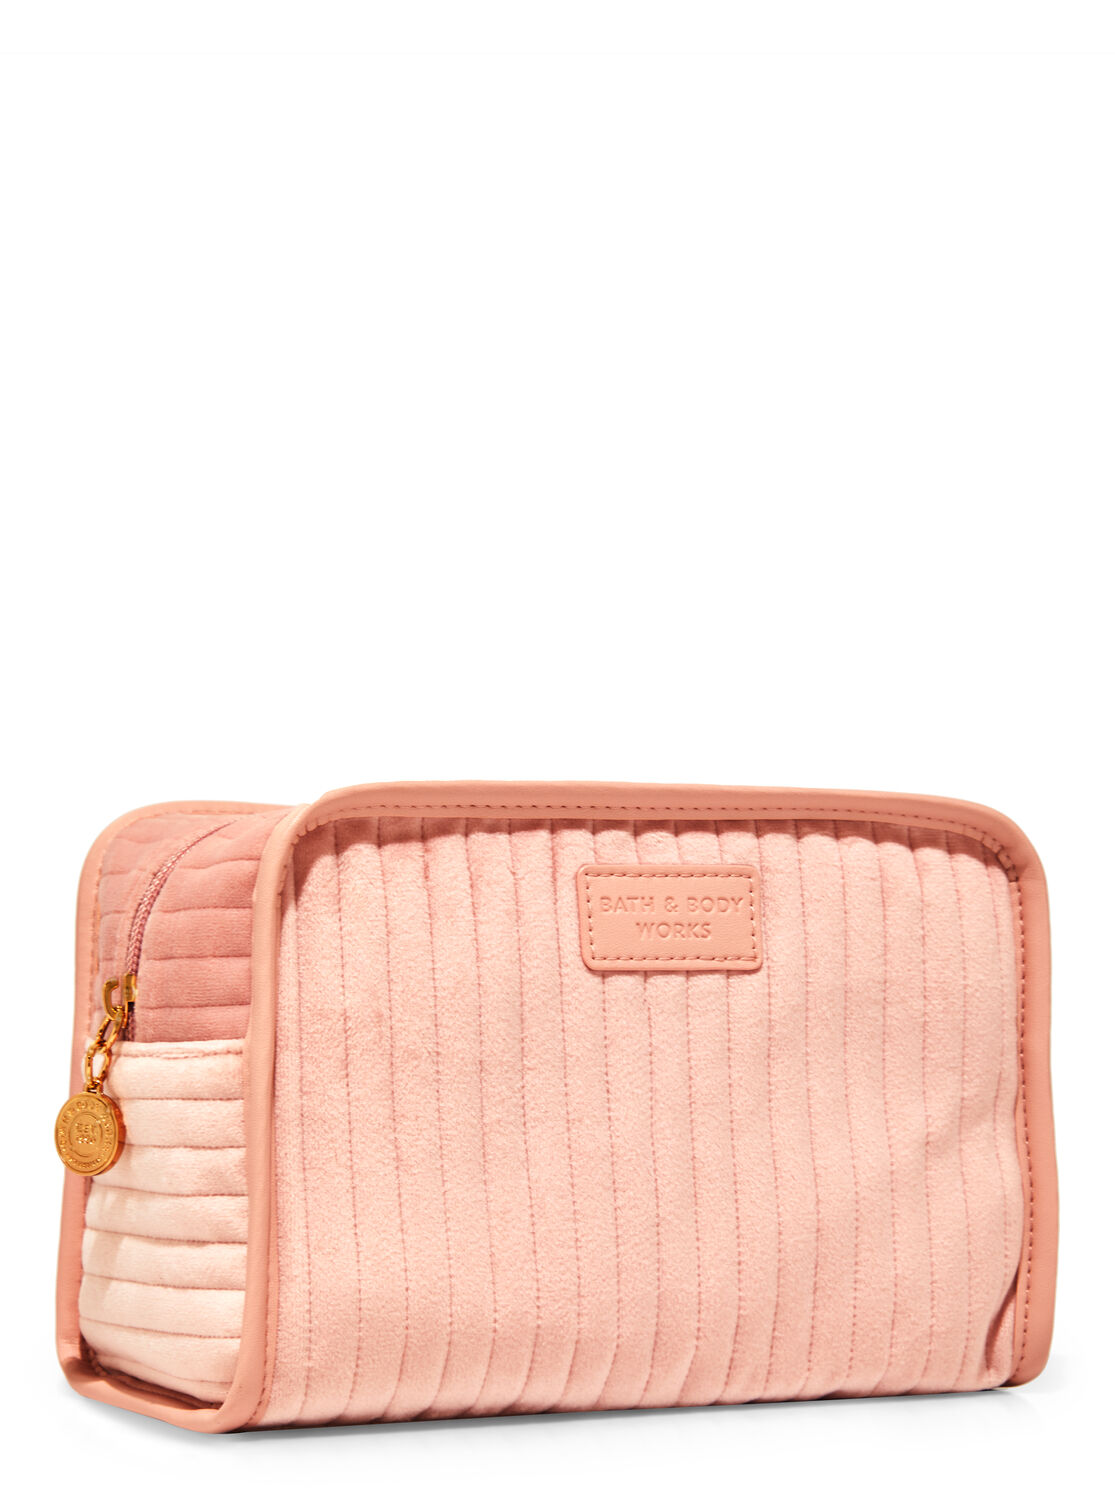 Buy TRAVEL BLUE Pink Luxury Beauty Case/ Toiletry Bag